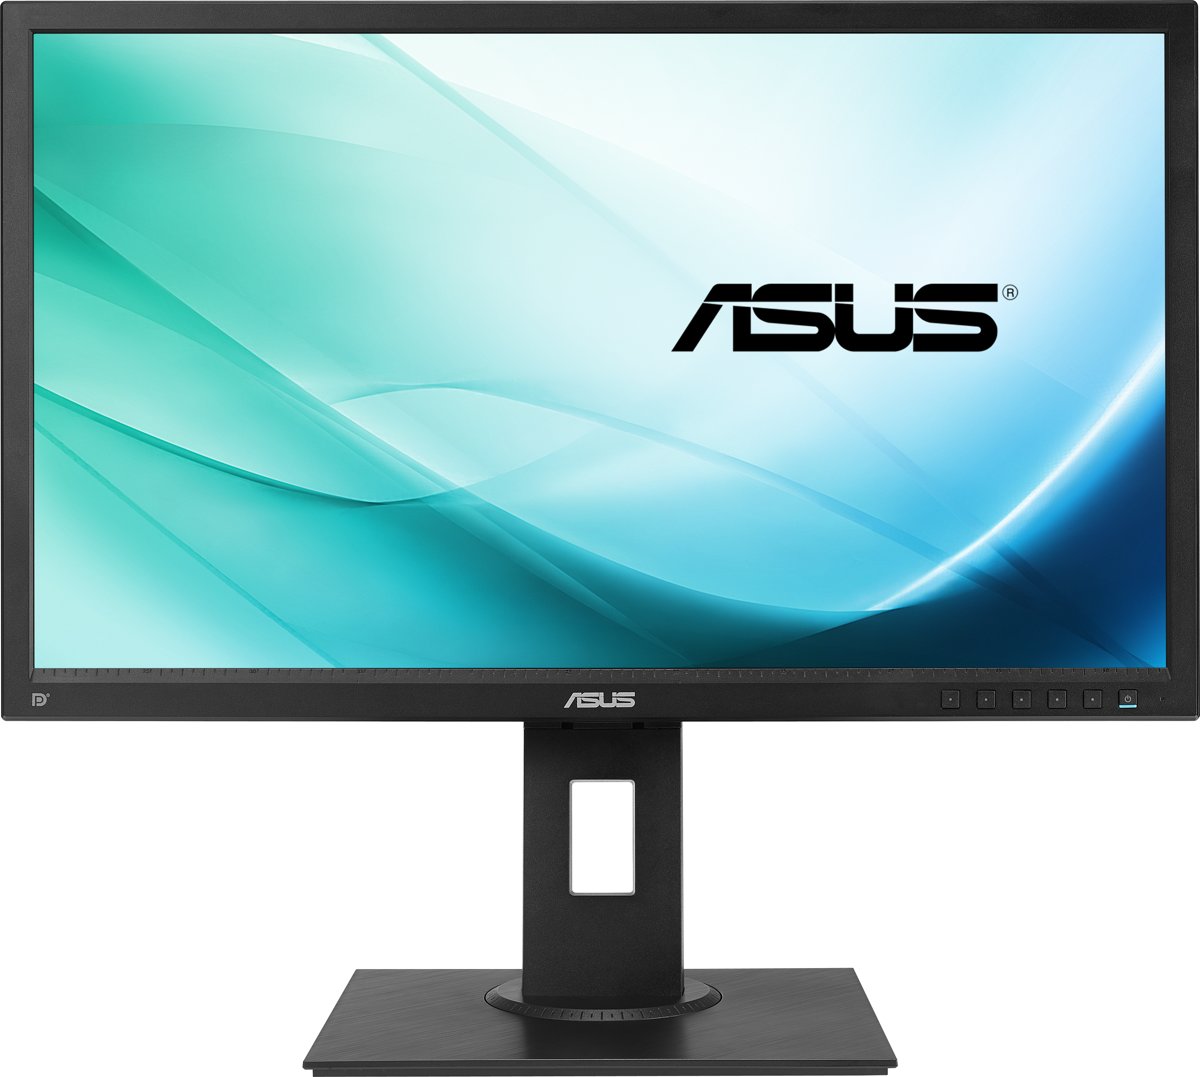 Asus BE249QLB - Full HD IPS Monitor